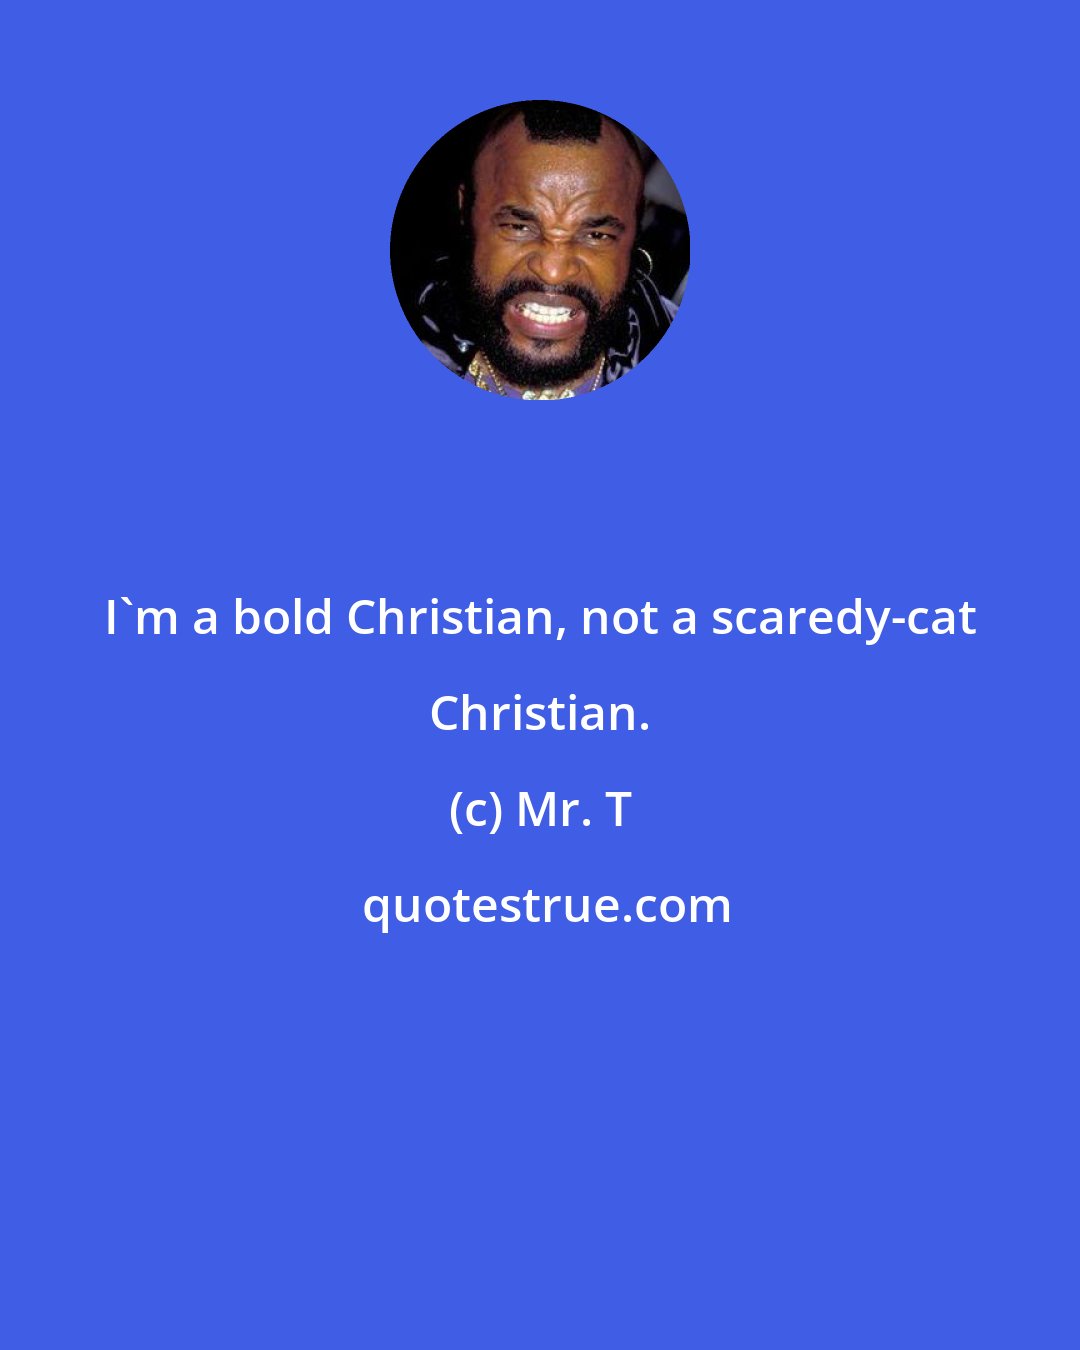 Mr. T: I'm a bold Christian, not a scaredy-cat Christian.